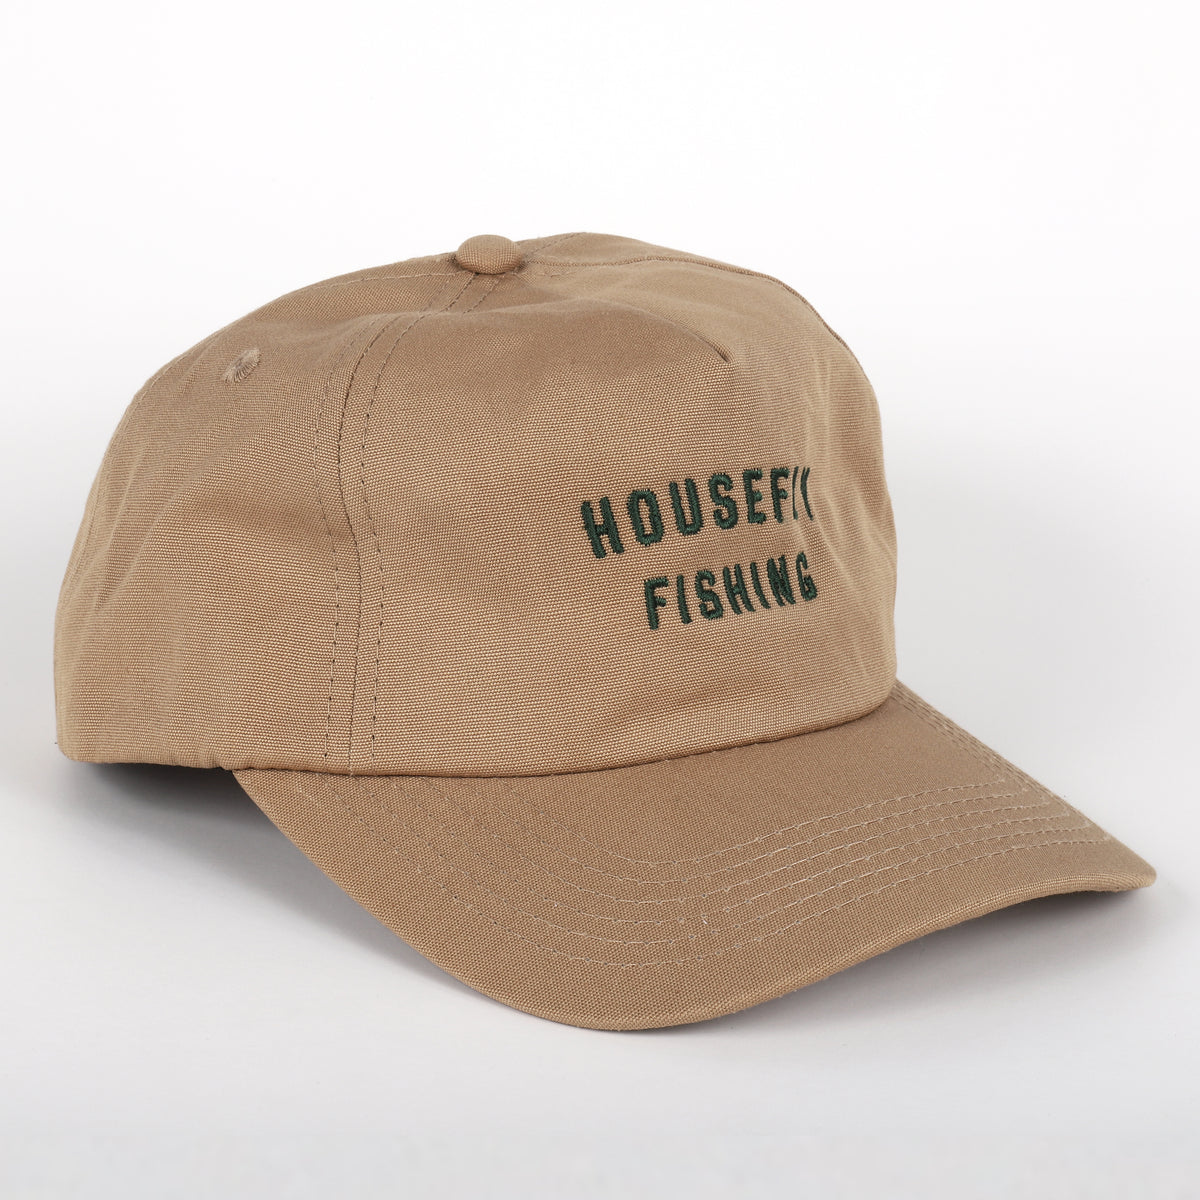 Housefly Fishing Hat - Khaki / Green